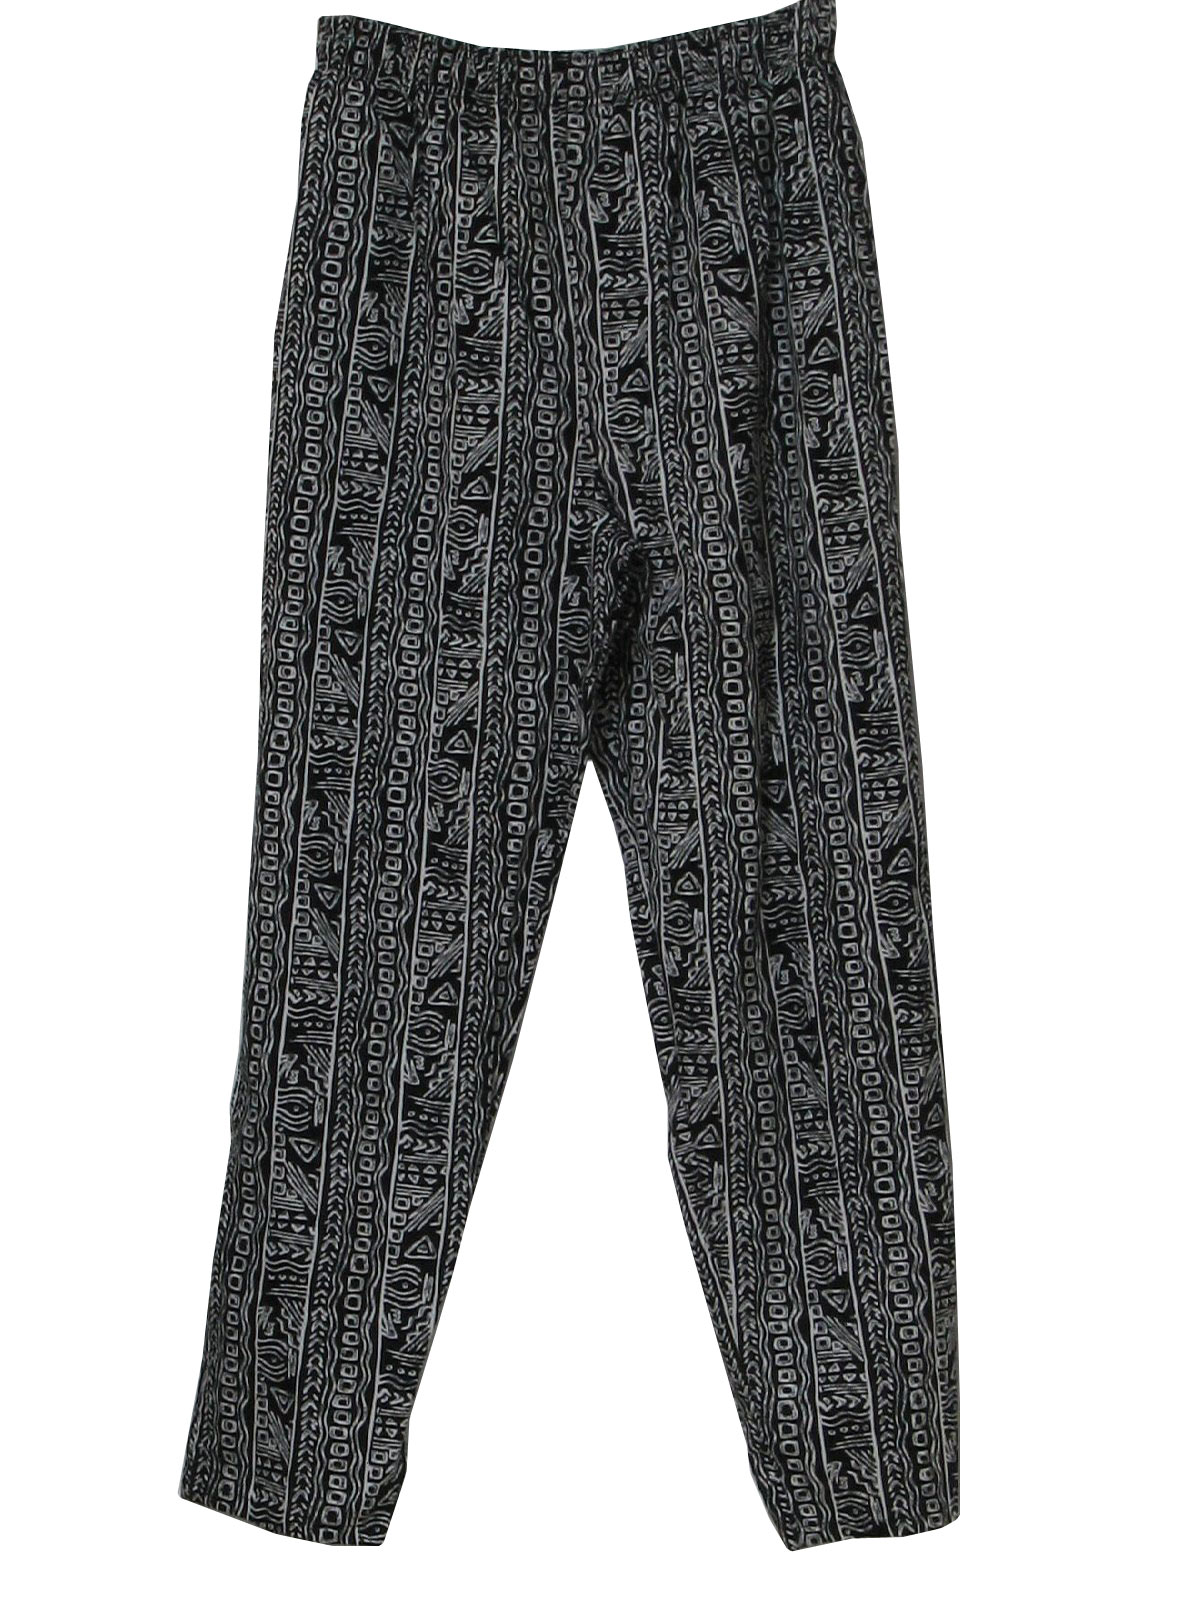 80's Vintage Pants: 80s vintage -Missing Label- Unisex black and white ...